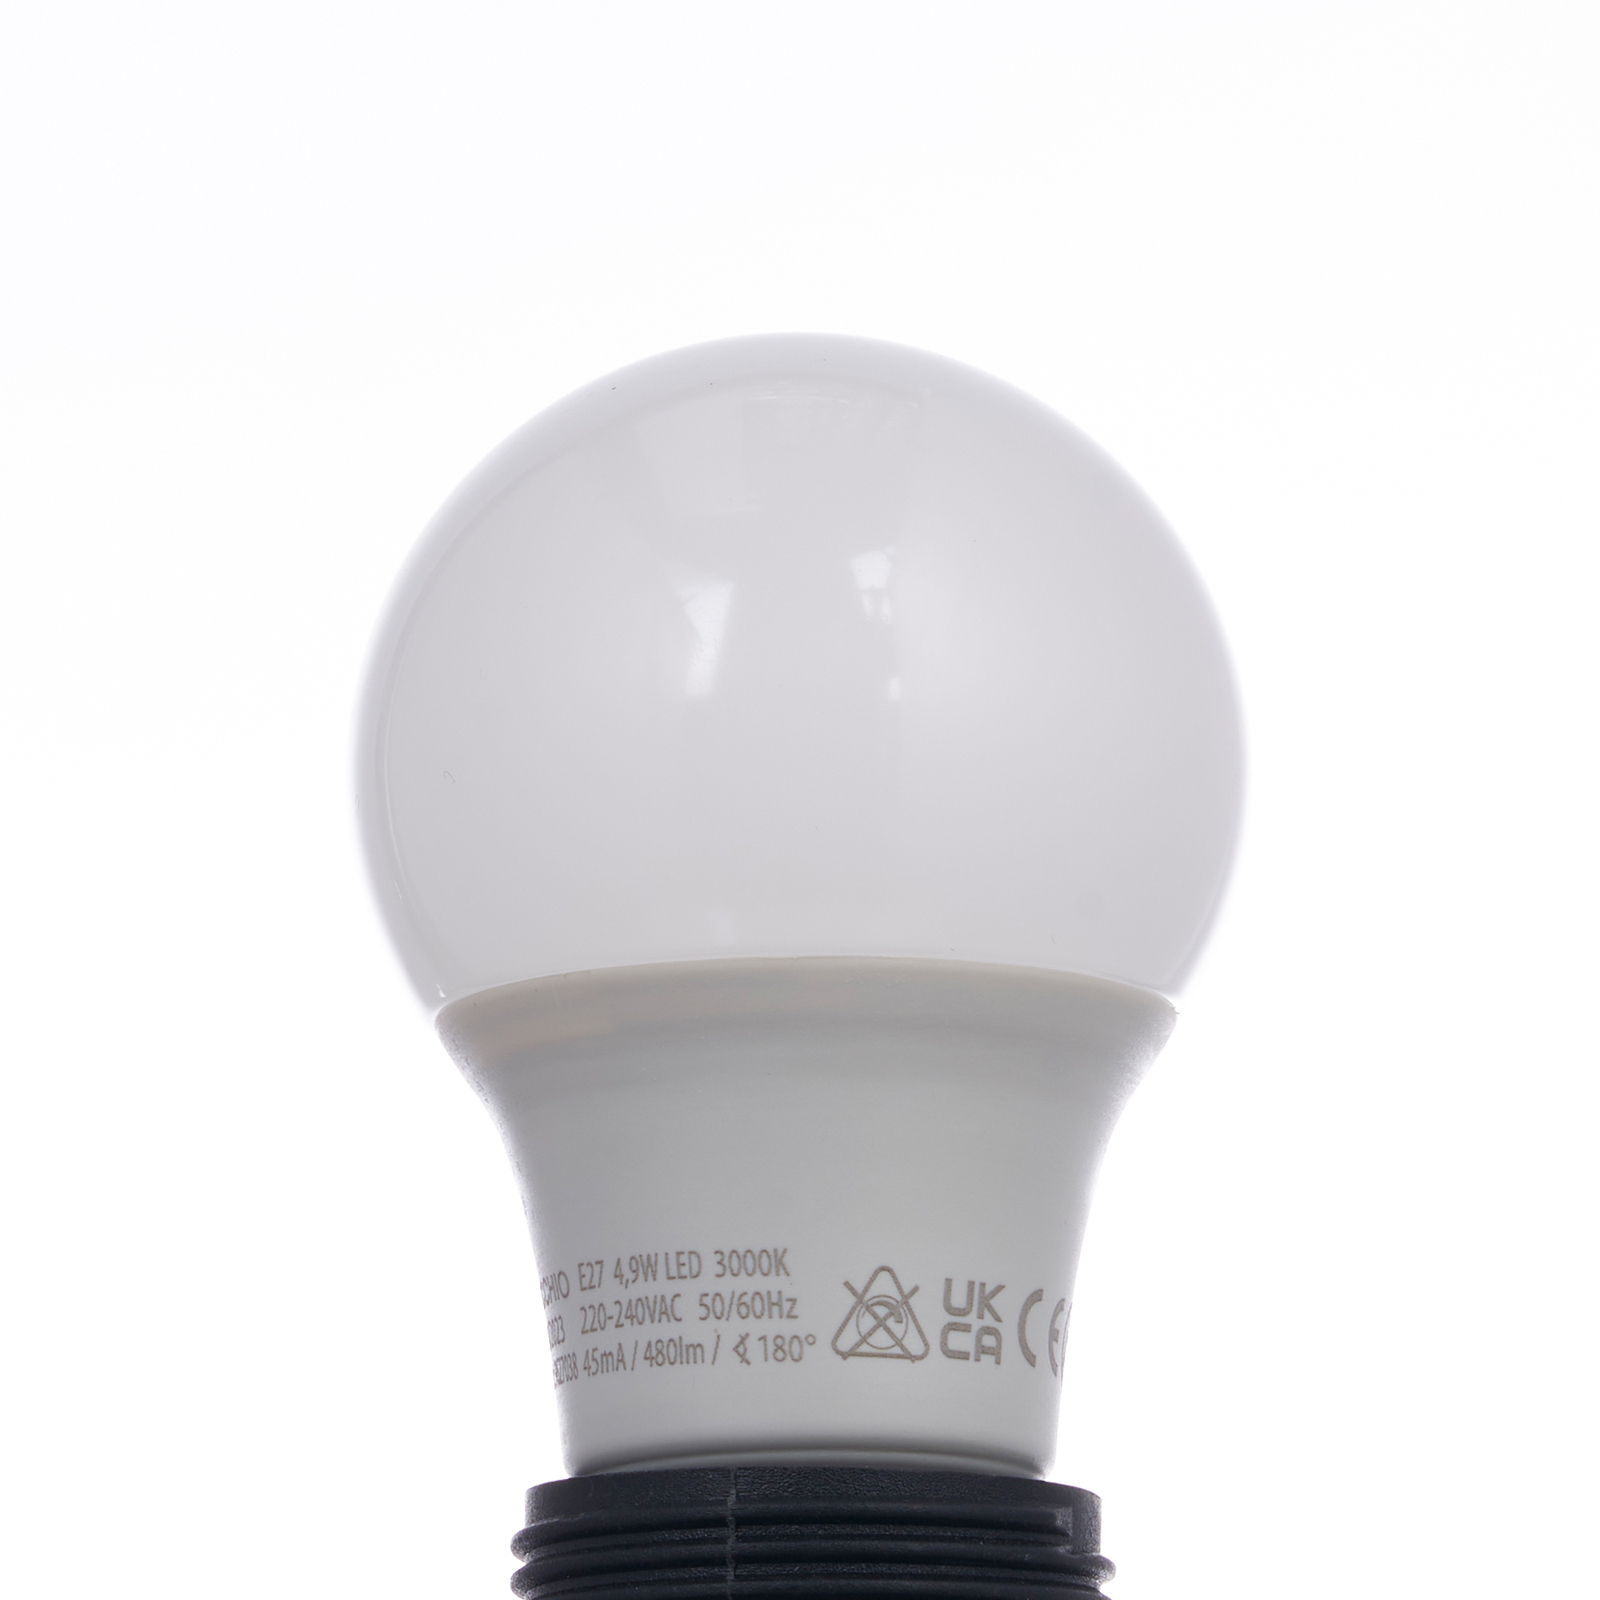 LED bulb E27 A60 4.9 W 3,000 K opal